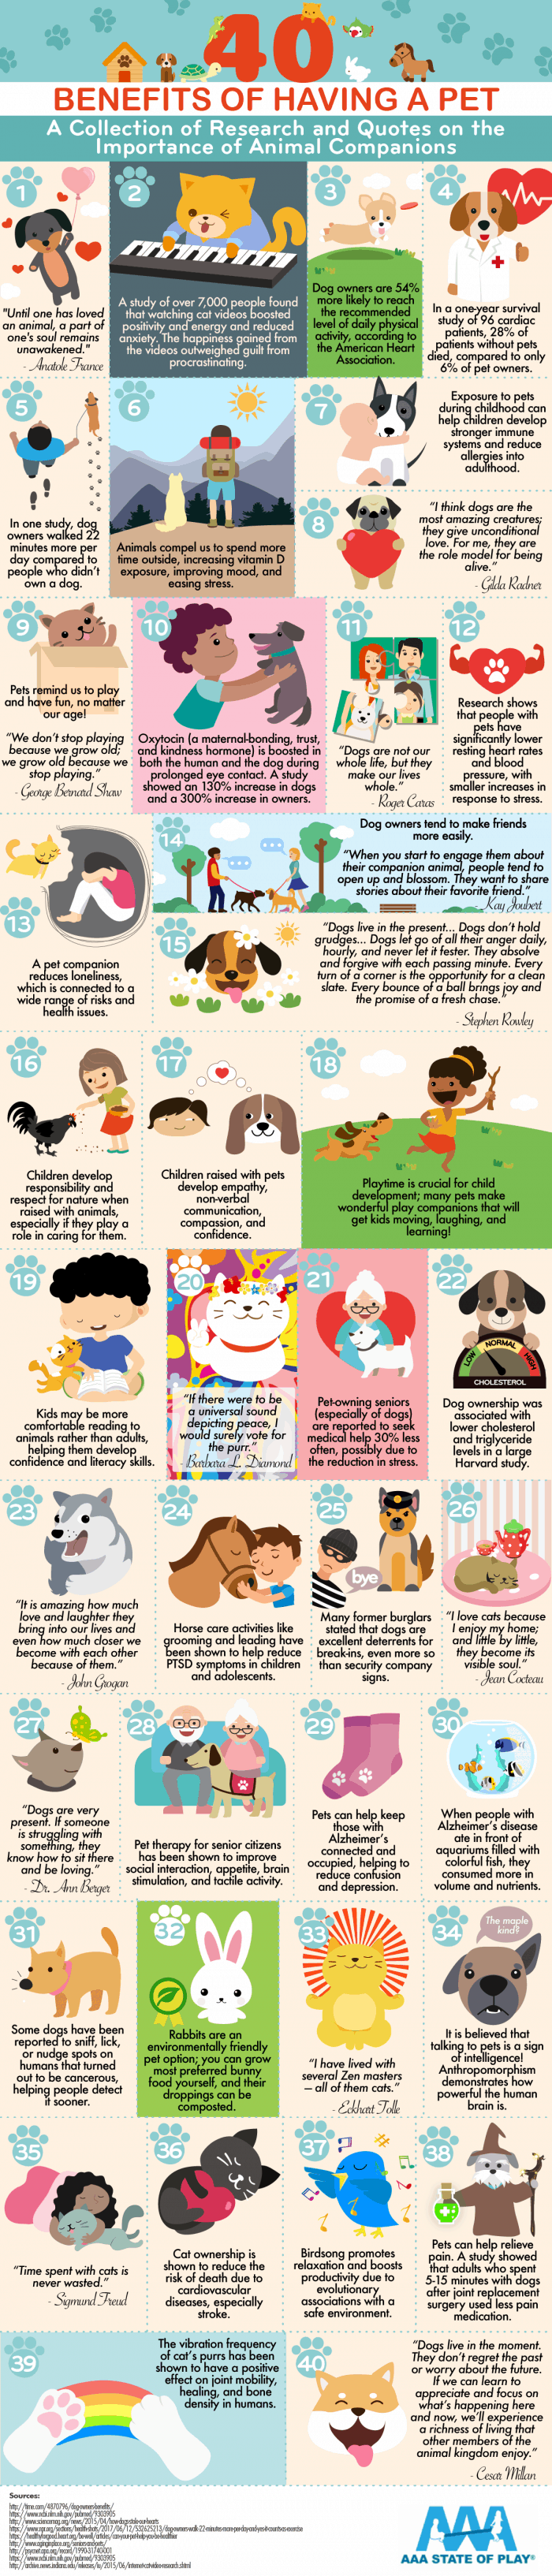 40 benefits of pet ownership